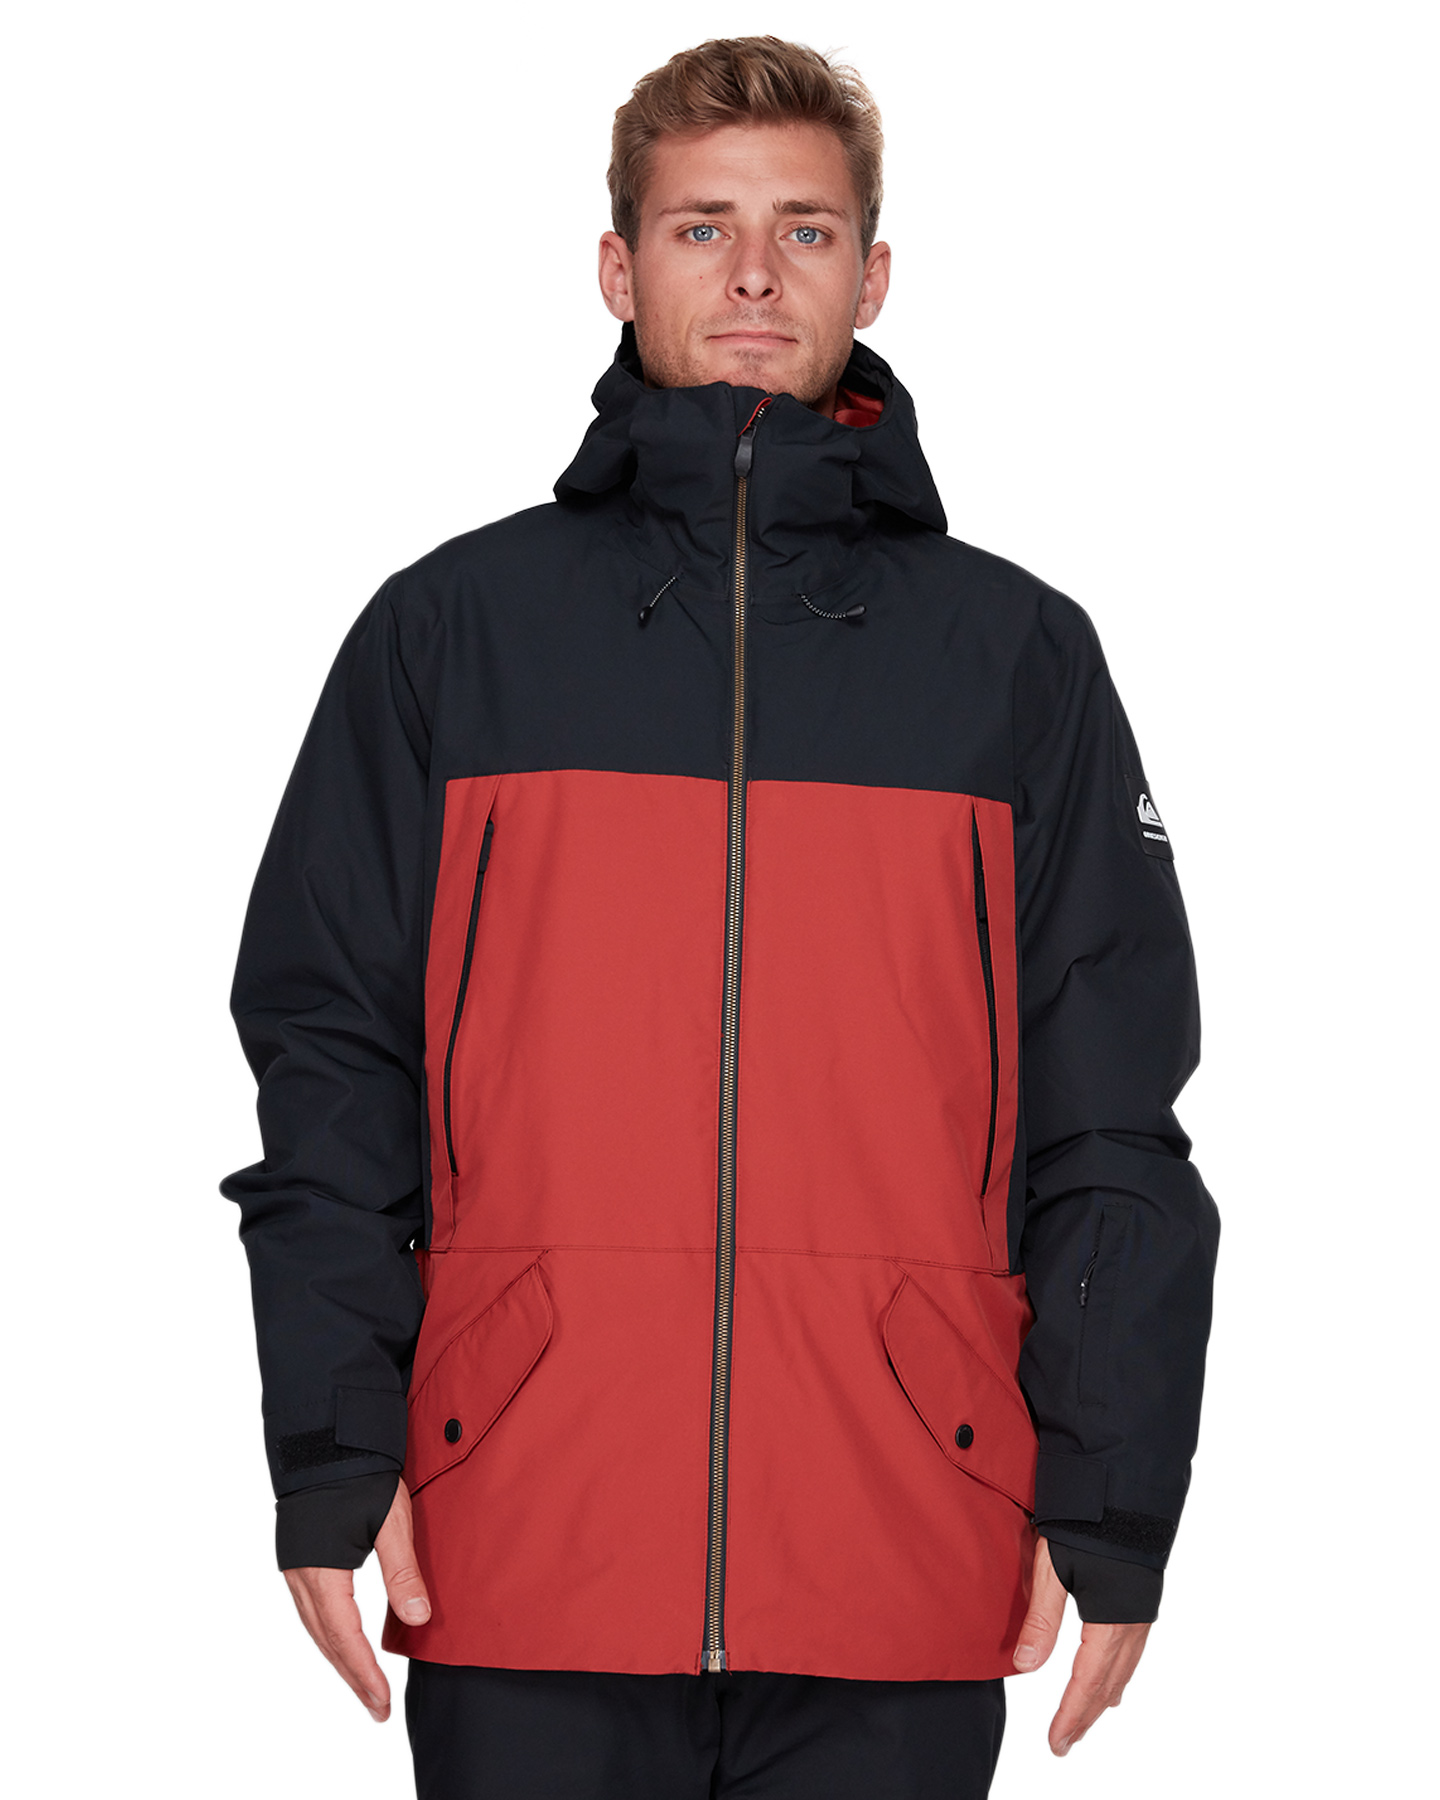 quiksilver ambition snowboard jacket